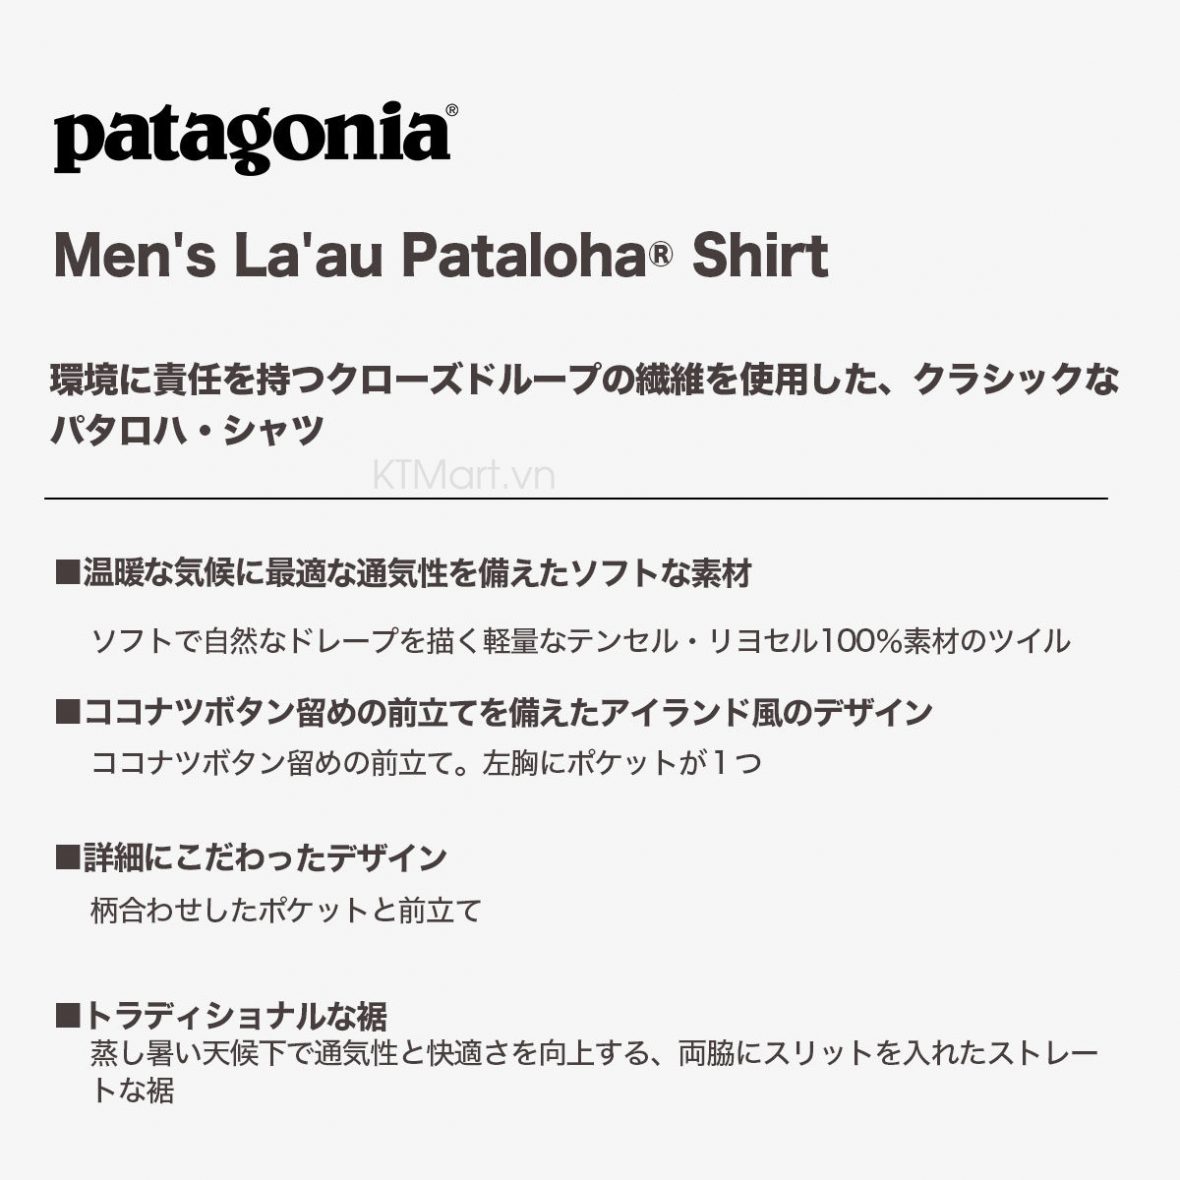 Patagonia Men’s La’au Pataloha® Shirt 52552 ktmart 5